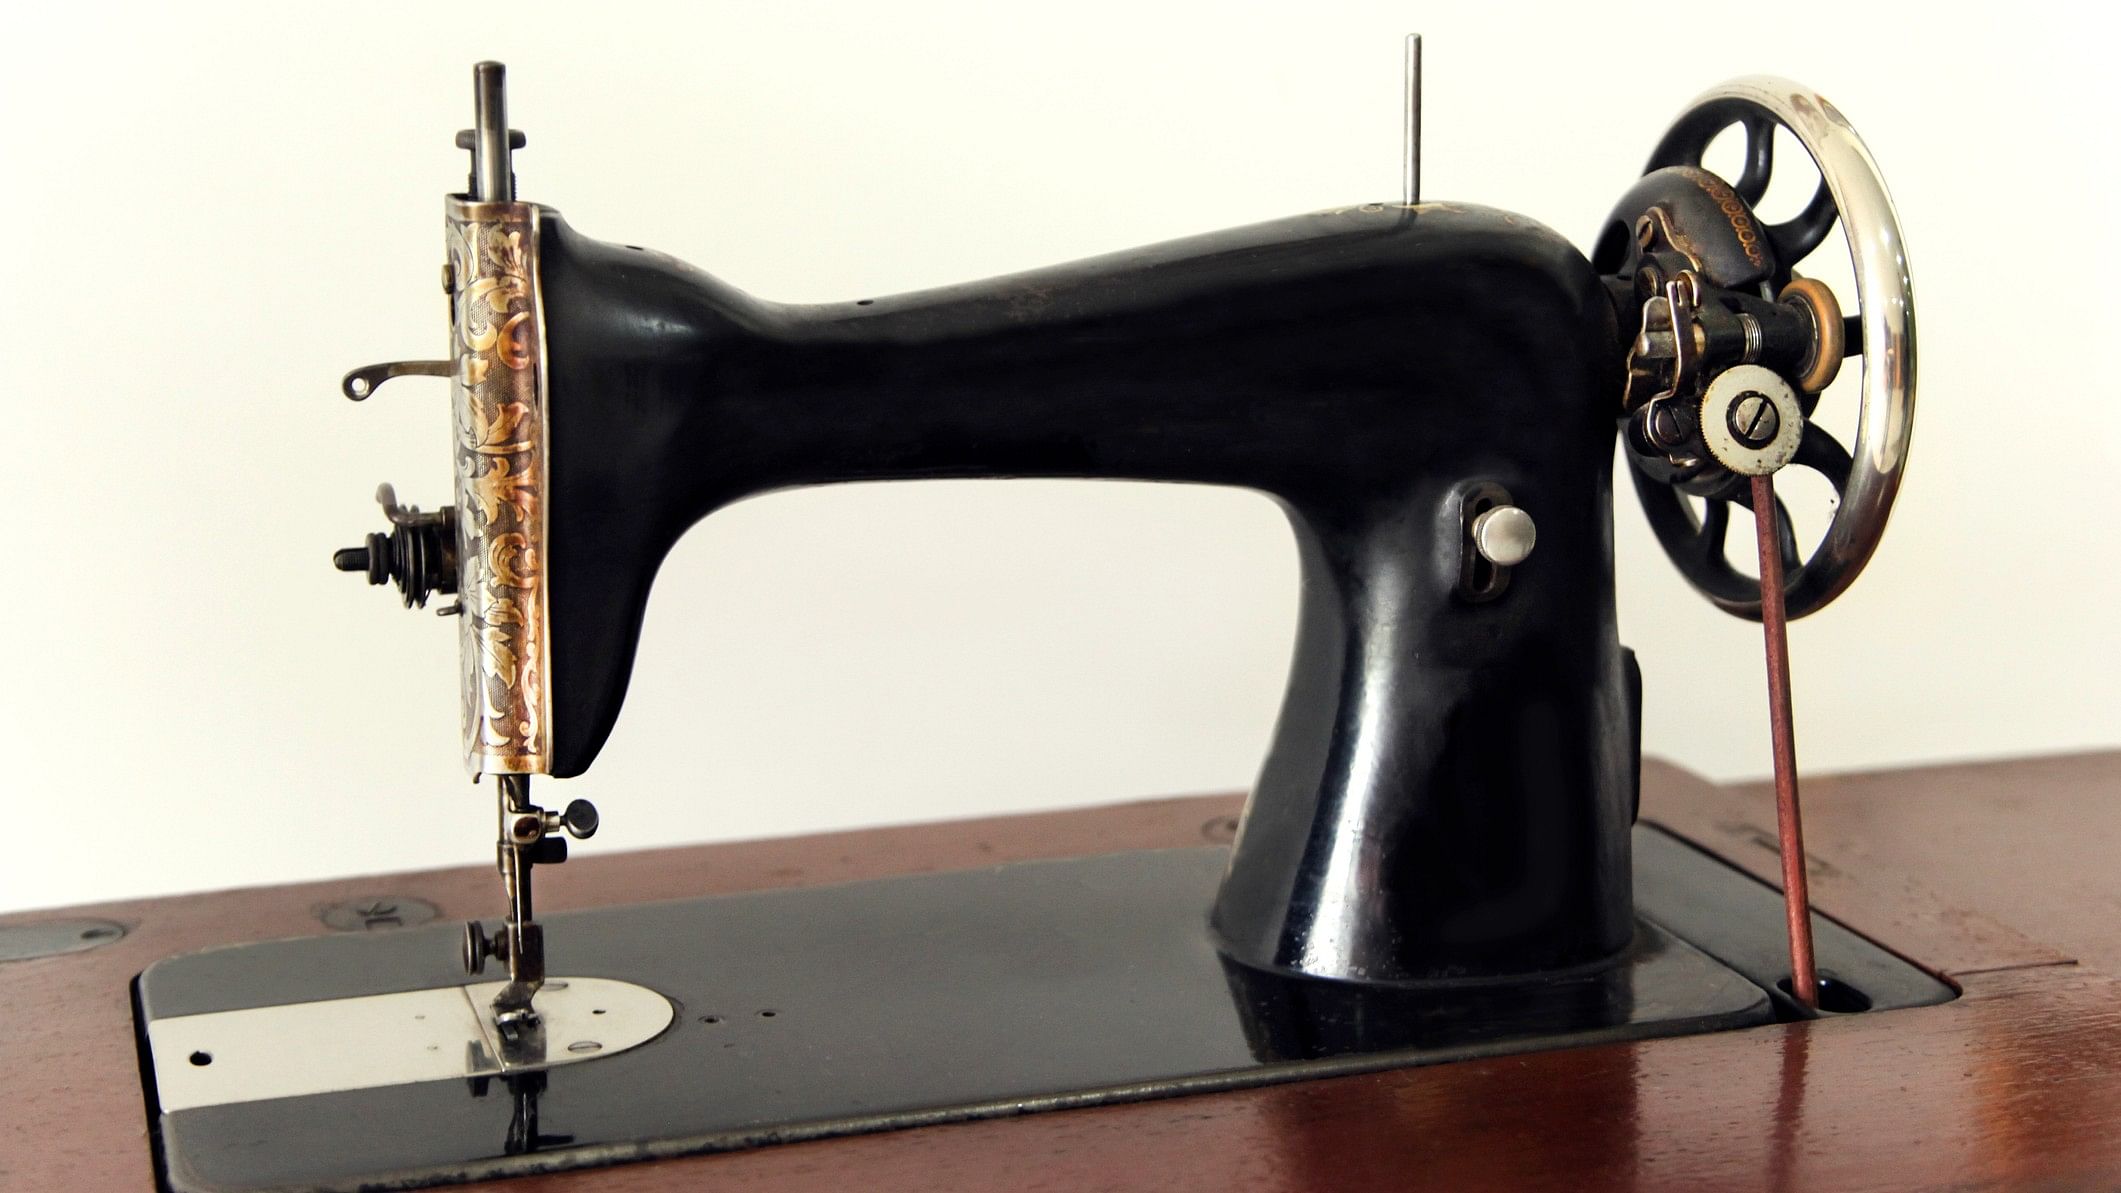 <div class="paragraphs"><p>Representative image showing a sewing machine.</p></div>